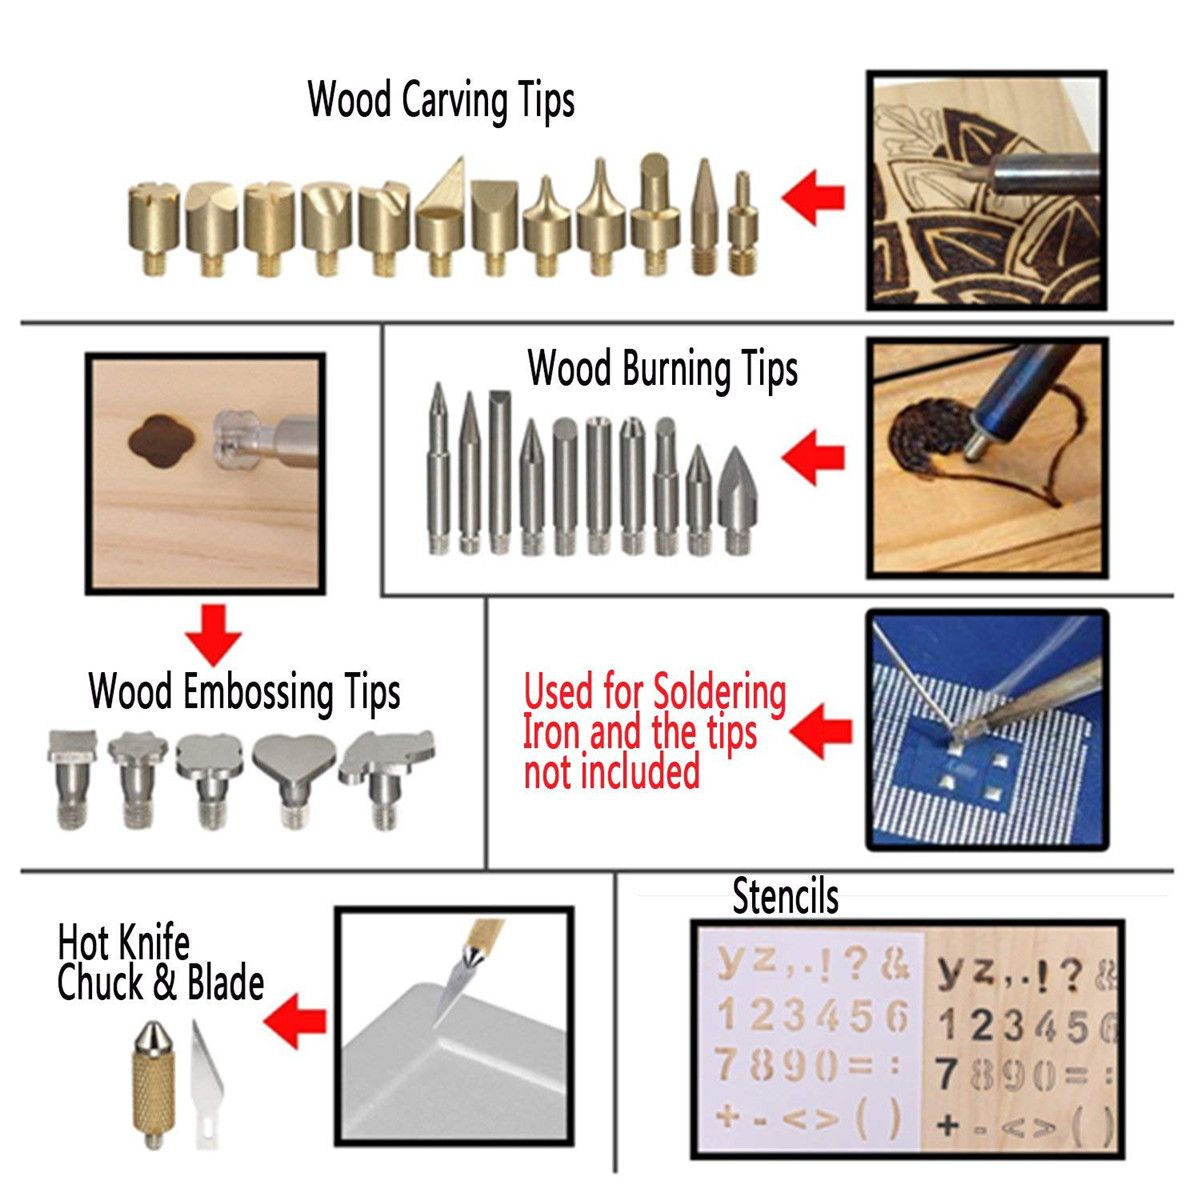 41Pcs-60W-Electric-Soldering-Iron-Wood-Burning-Pen-Soldering-Tools-Kits-39x-Assorted-Tips-Set-Craft--1606043